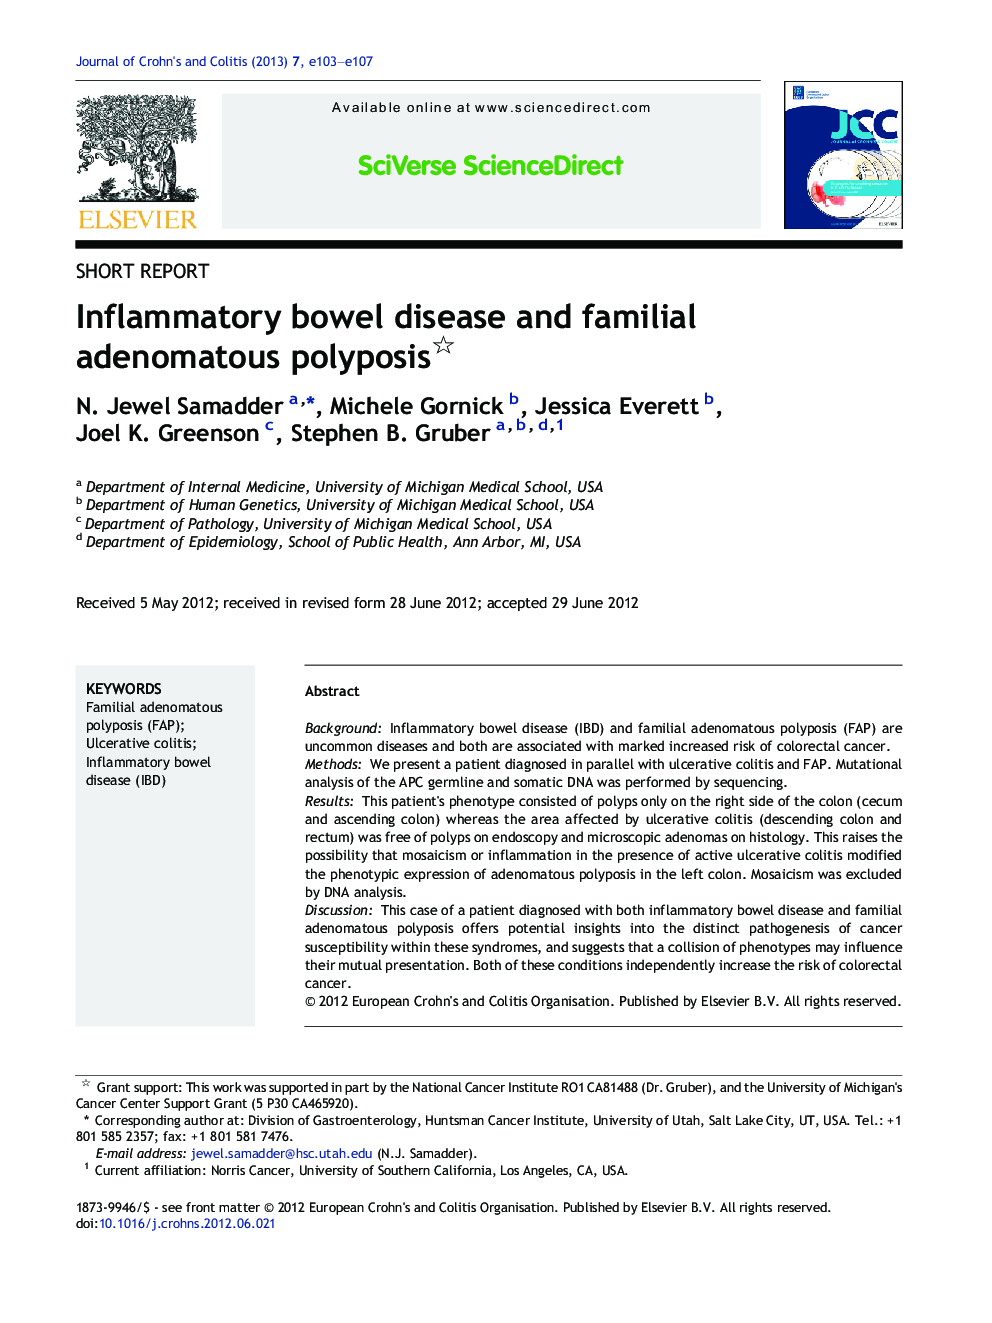 Inflammatory bowel disease and familial adenomatous polyposis